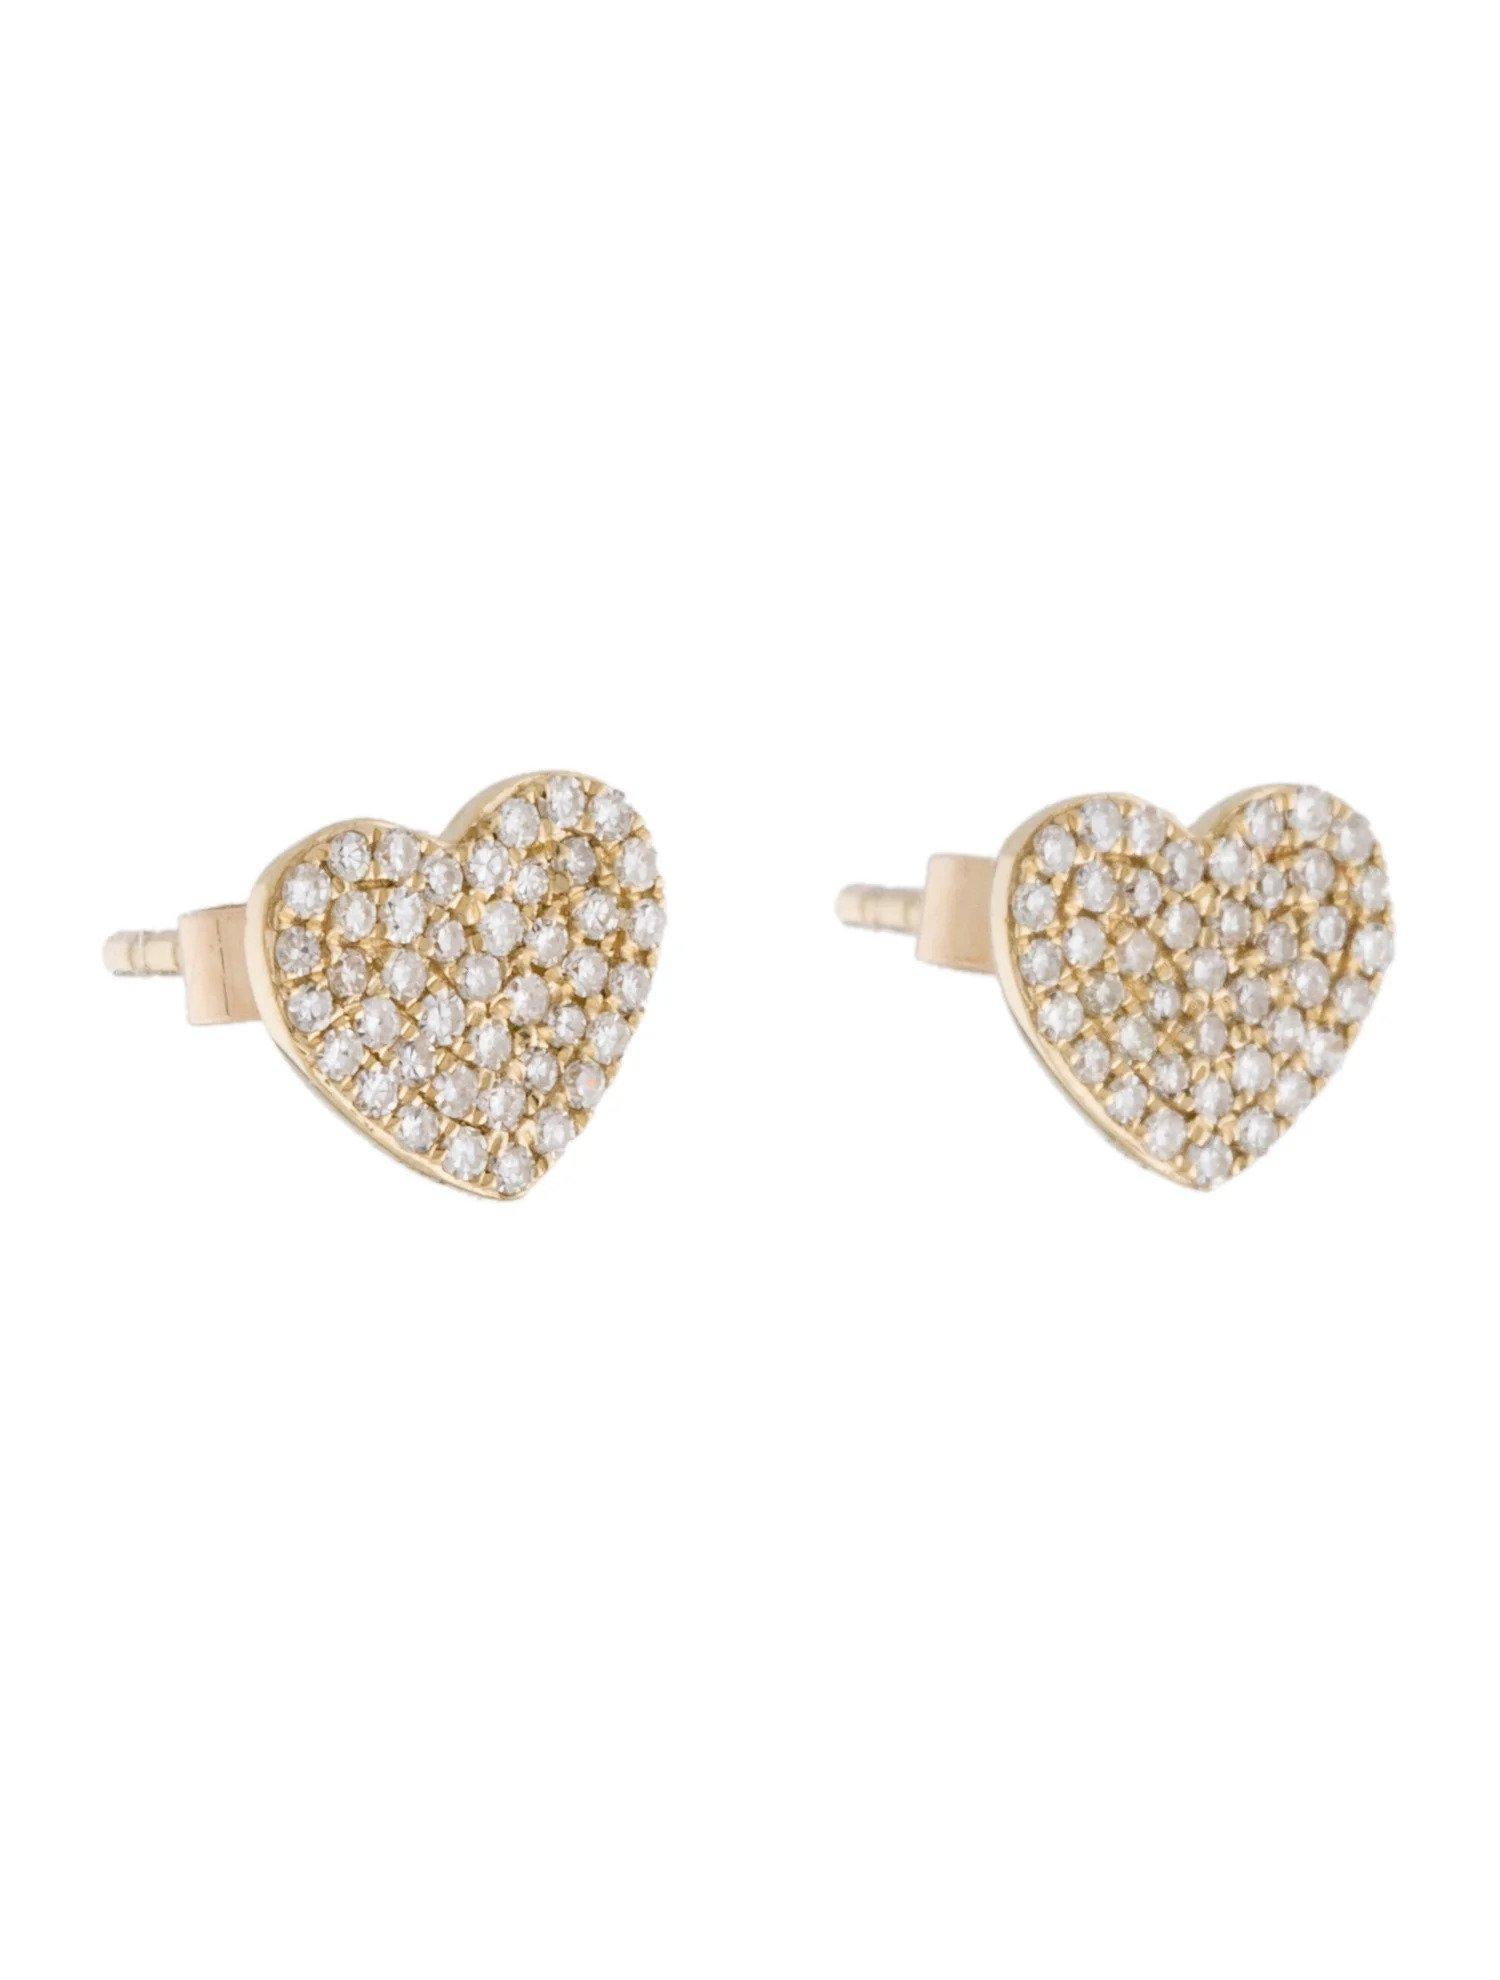 Round Cut 0.25 Carat Diamond Heart Yellow Gold Stud Earrings  For Sale